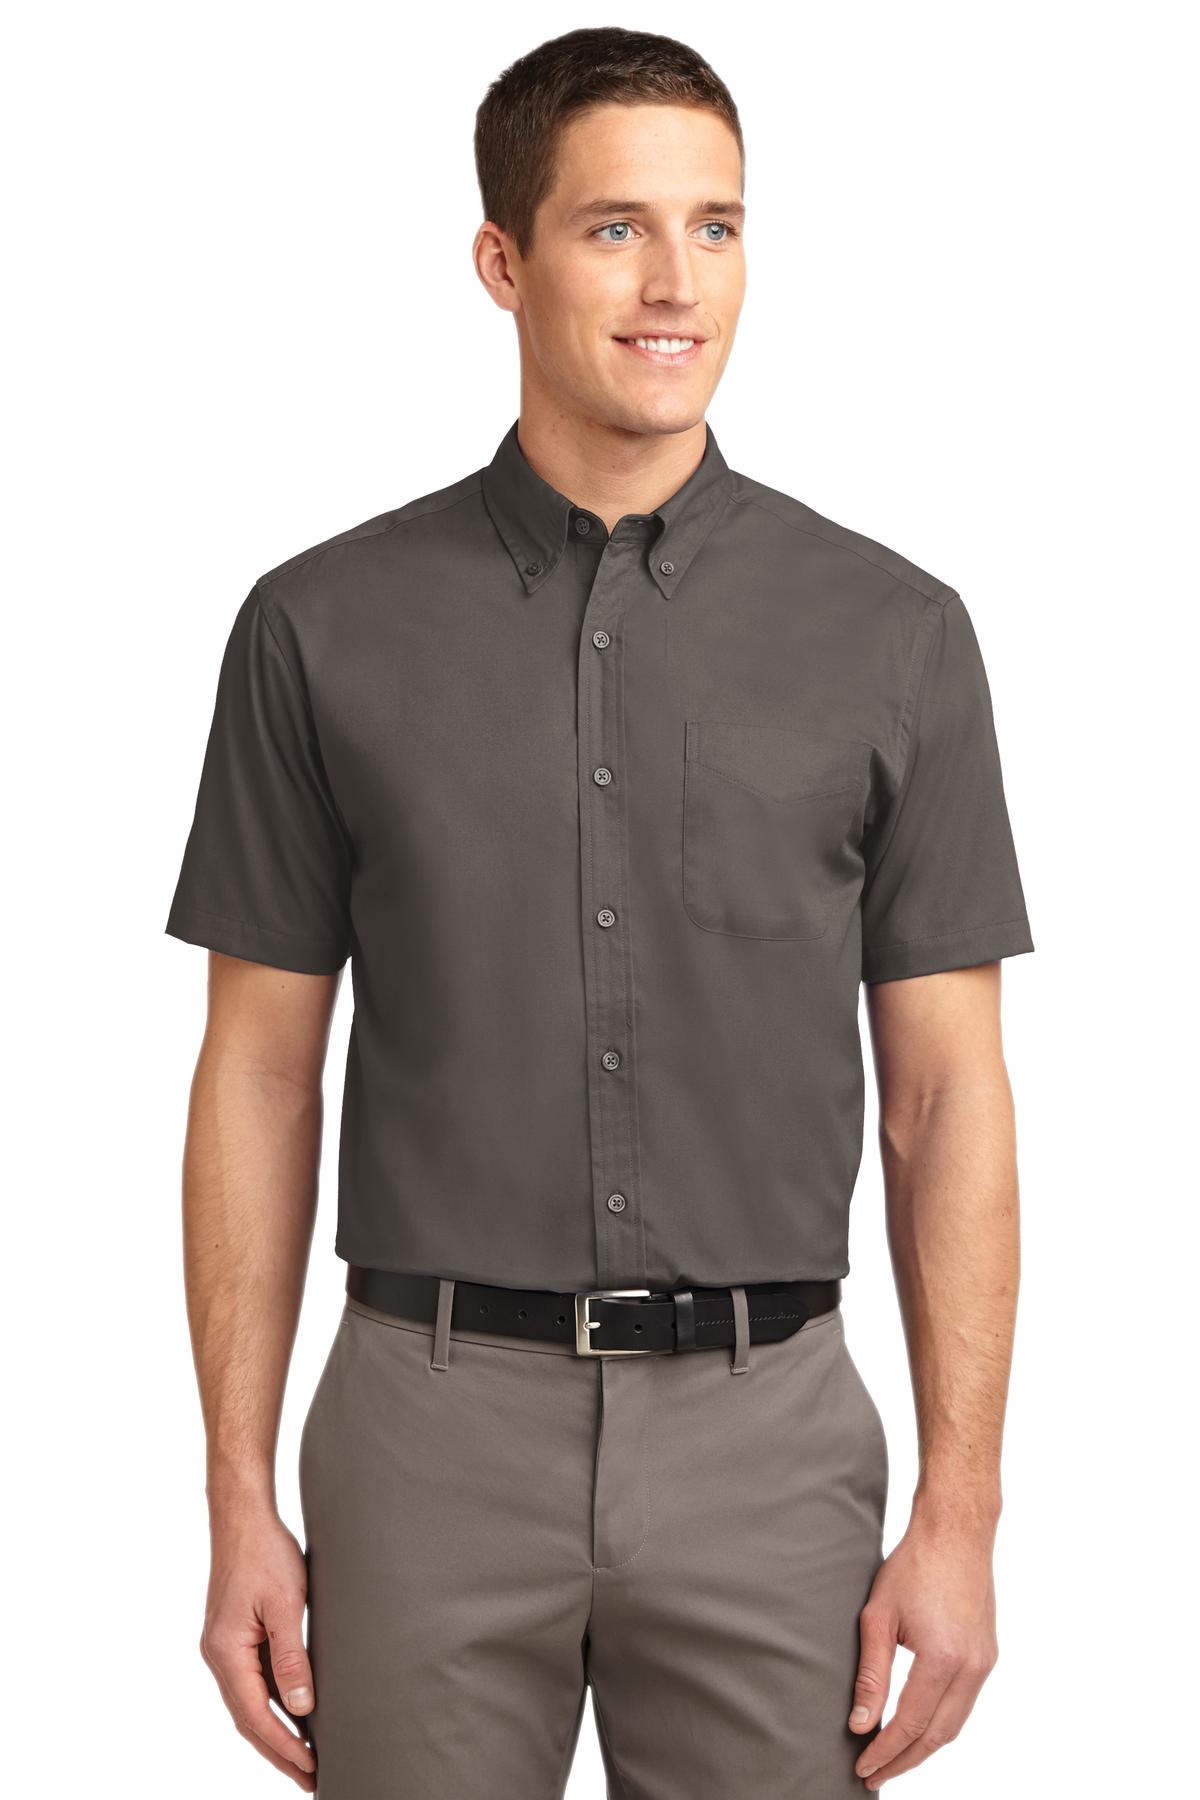 Port Authority  Tall Short Sleeve Easy Care Shirt. TLS508